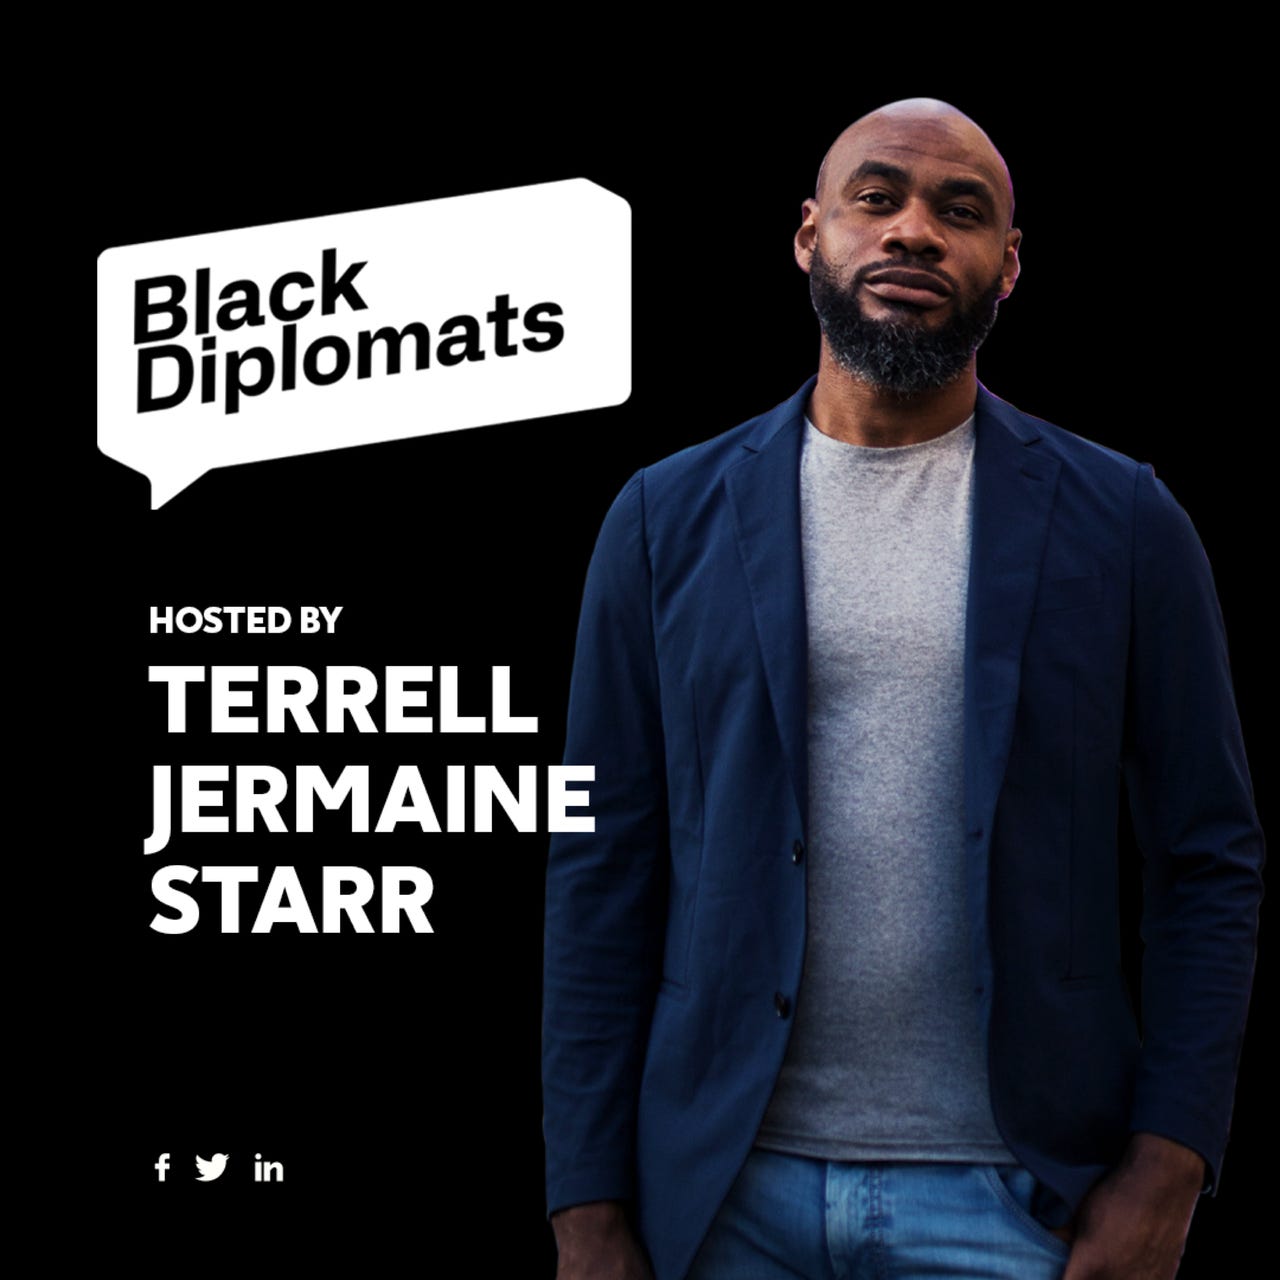 Black Diplomats